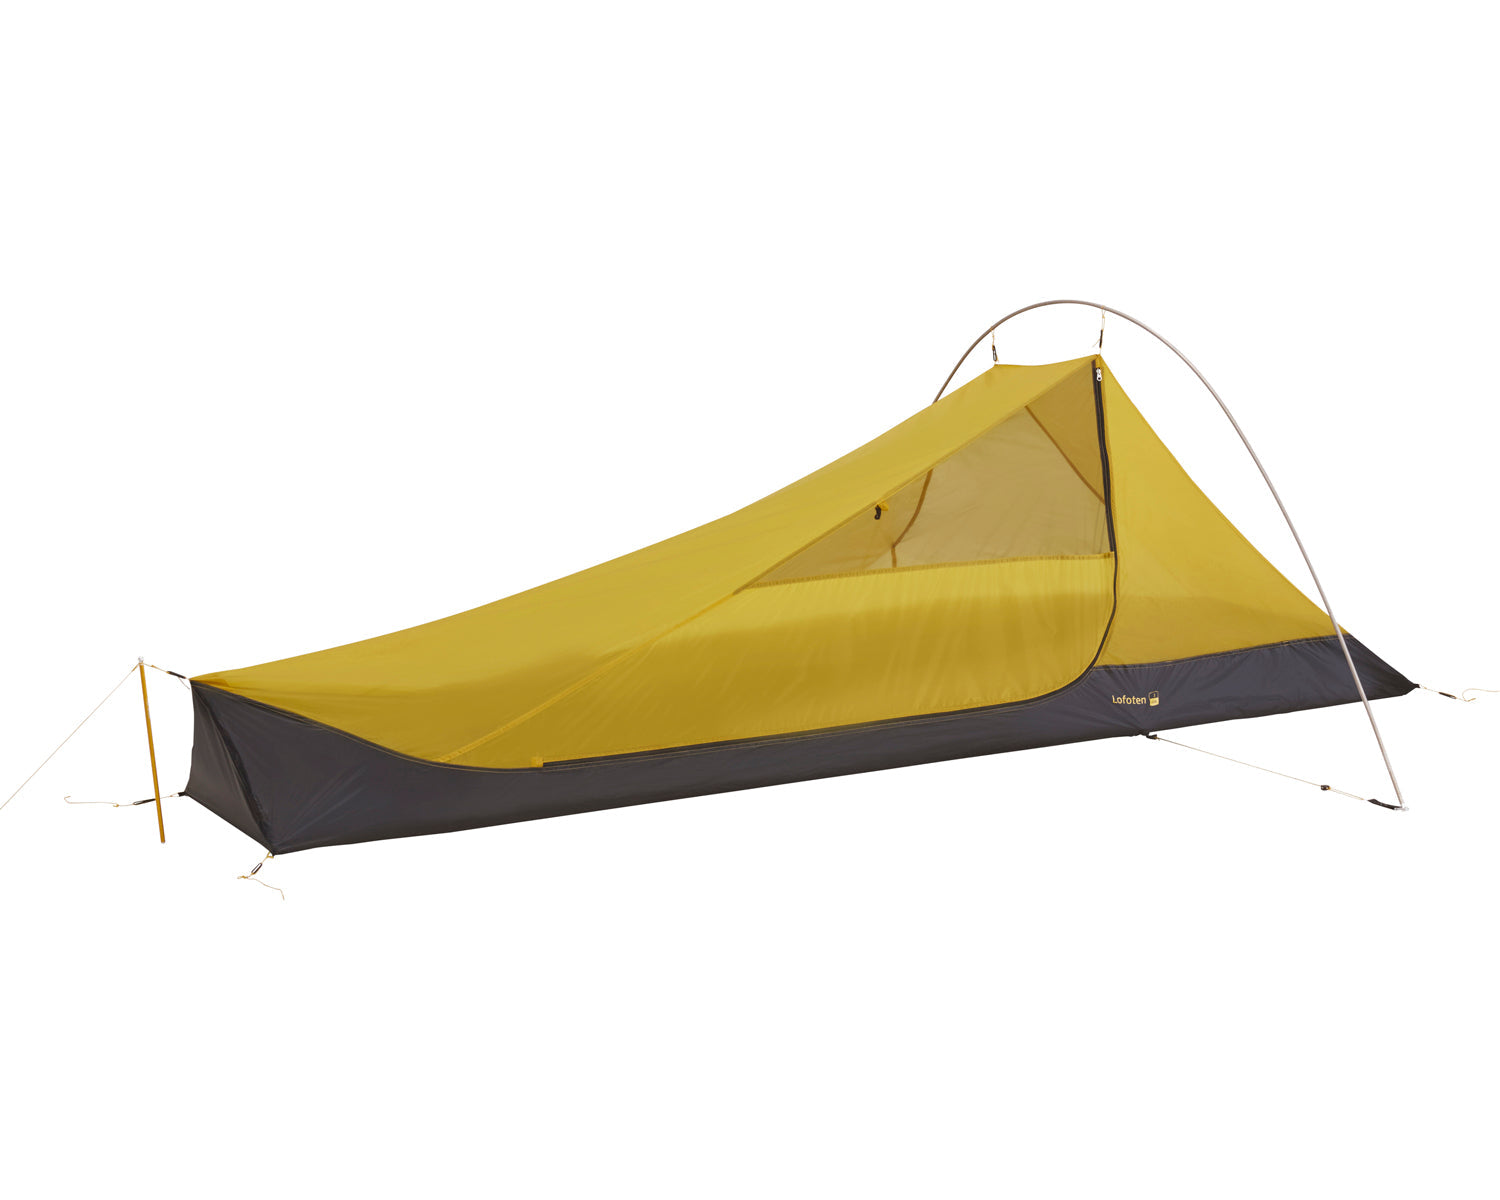 Lofoten 1 inner tent - 1 person - Mustard Yellow